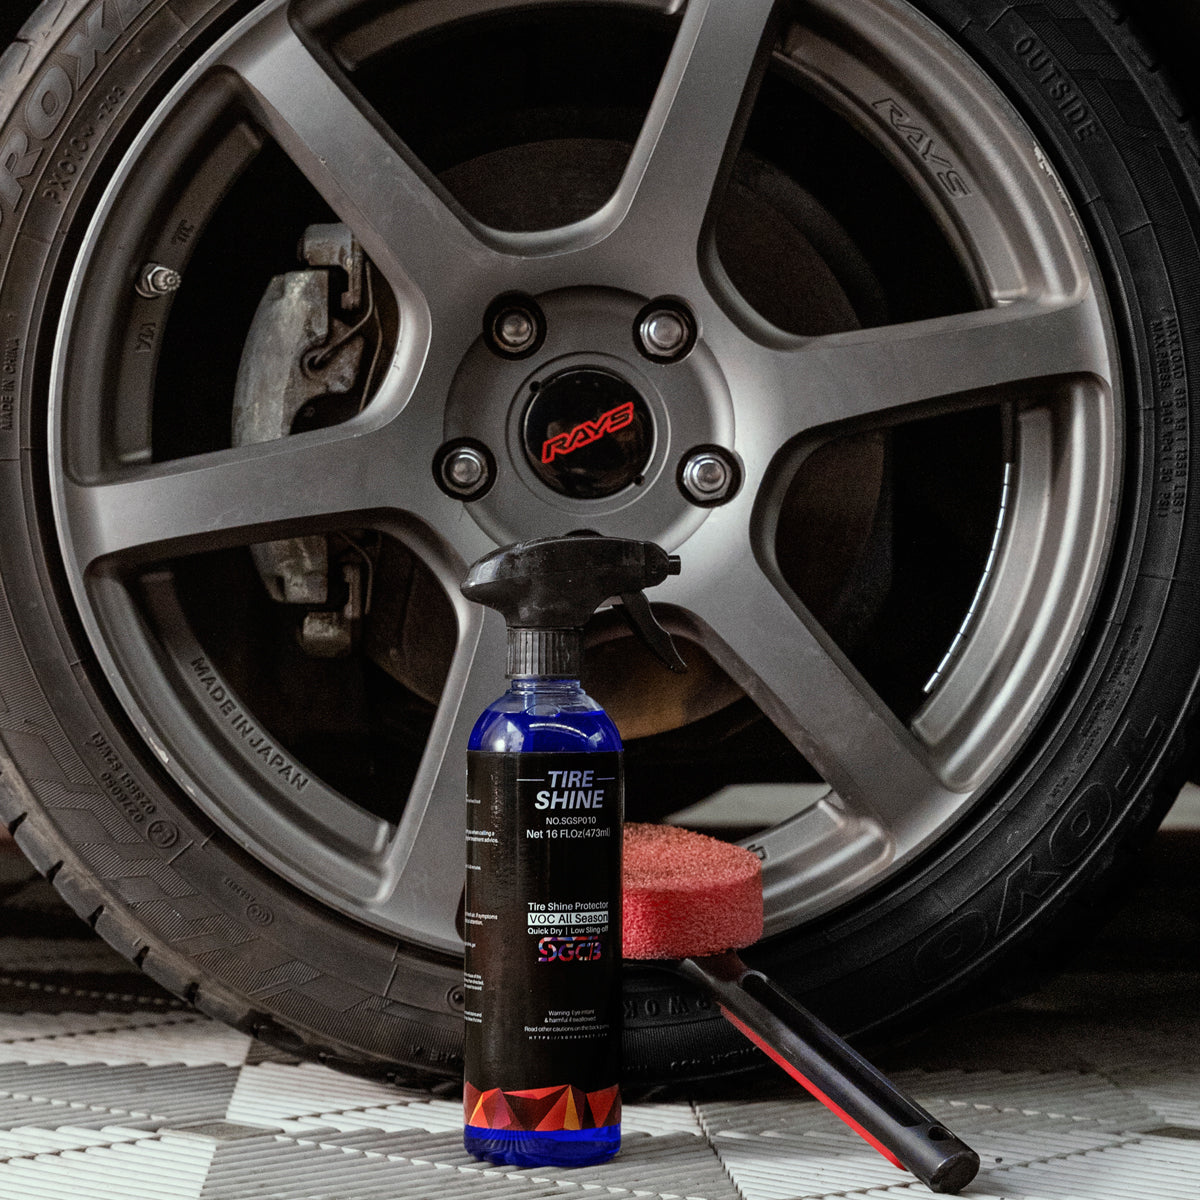 SGCB Pro Tire Shine Applicator Brush - Premium Auto Detailing Tire Dressing  Applicator Sponge Brush for Tire Shine, Ergonomic Grip with Long Handle